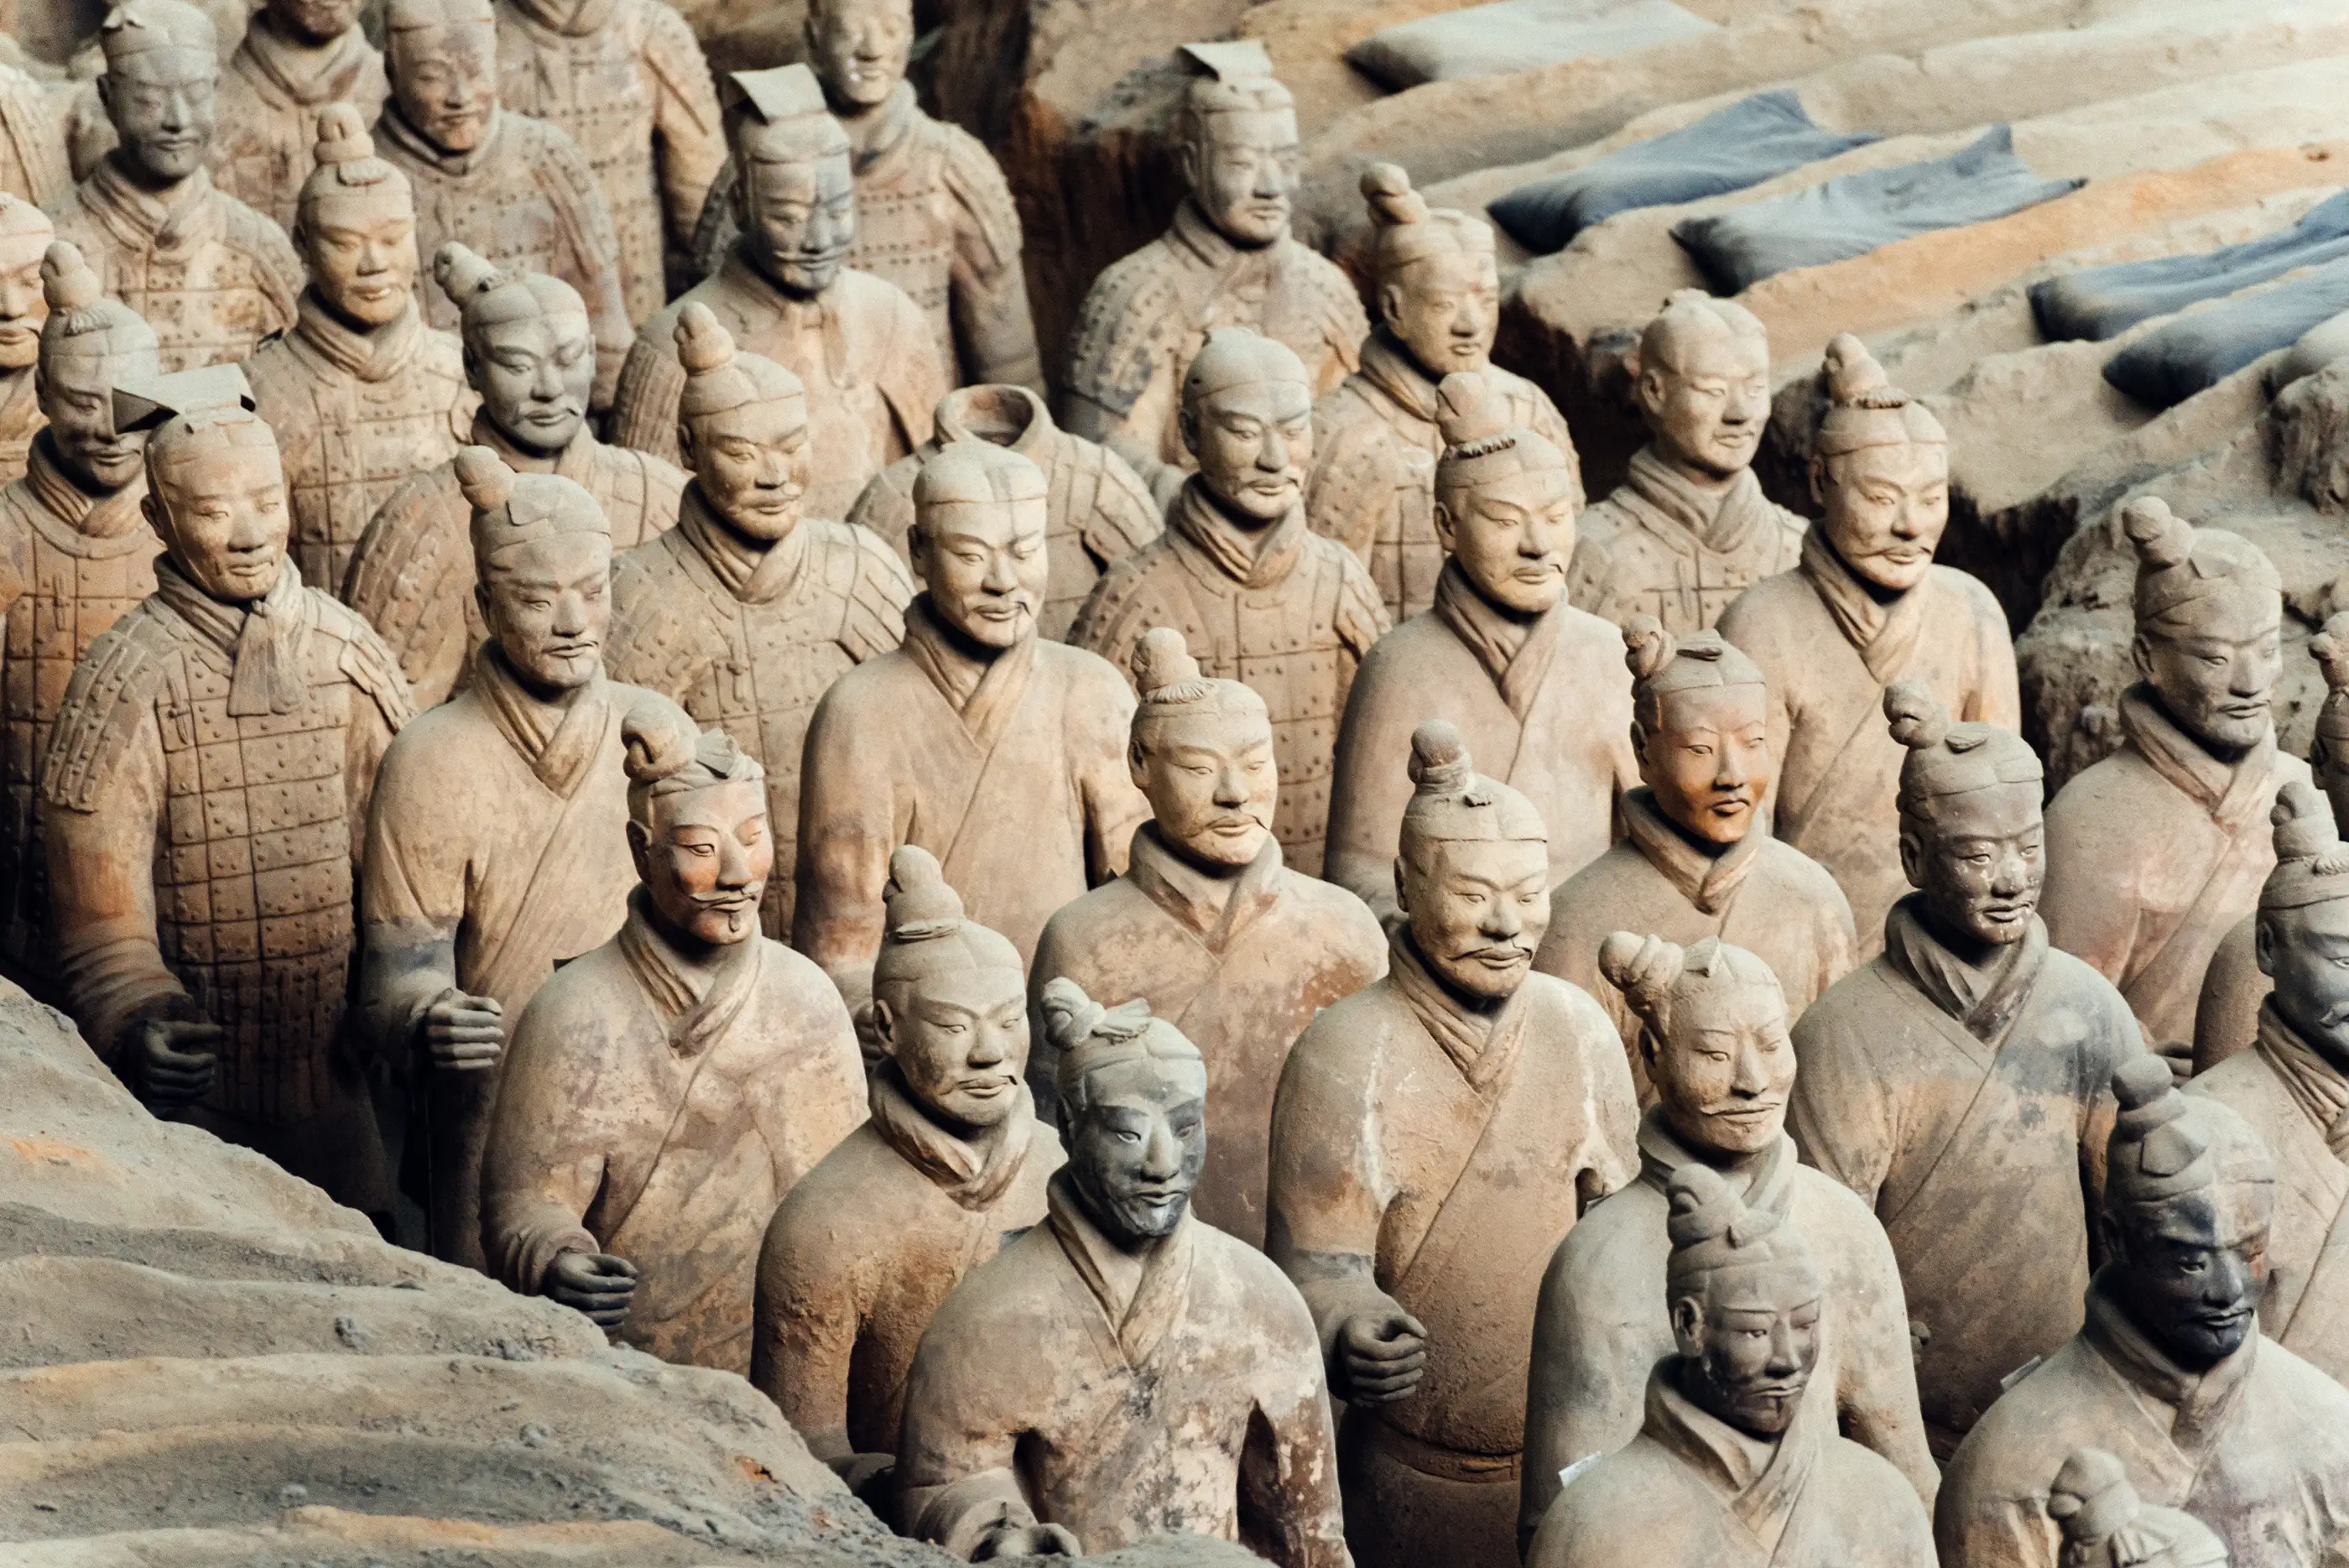 Terracotta Army in Xian, China